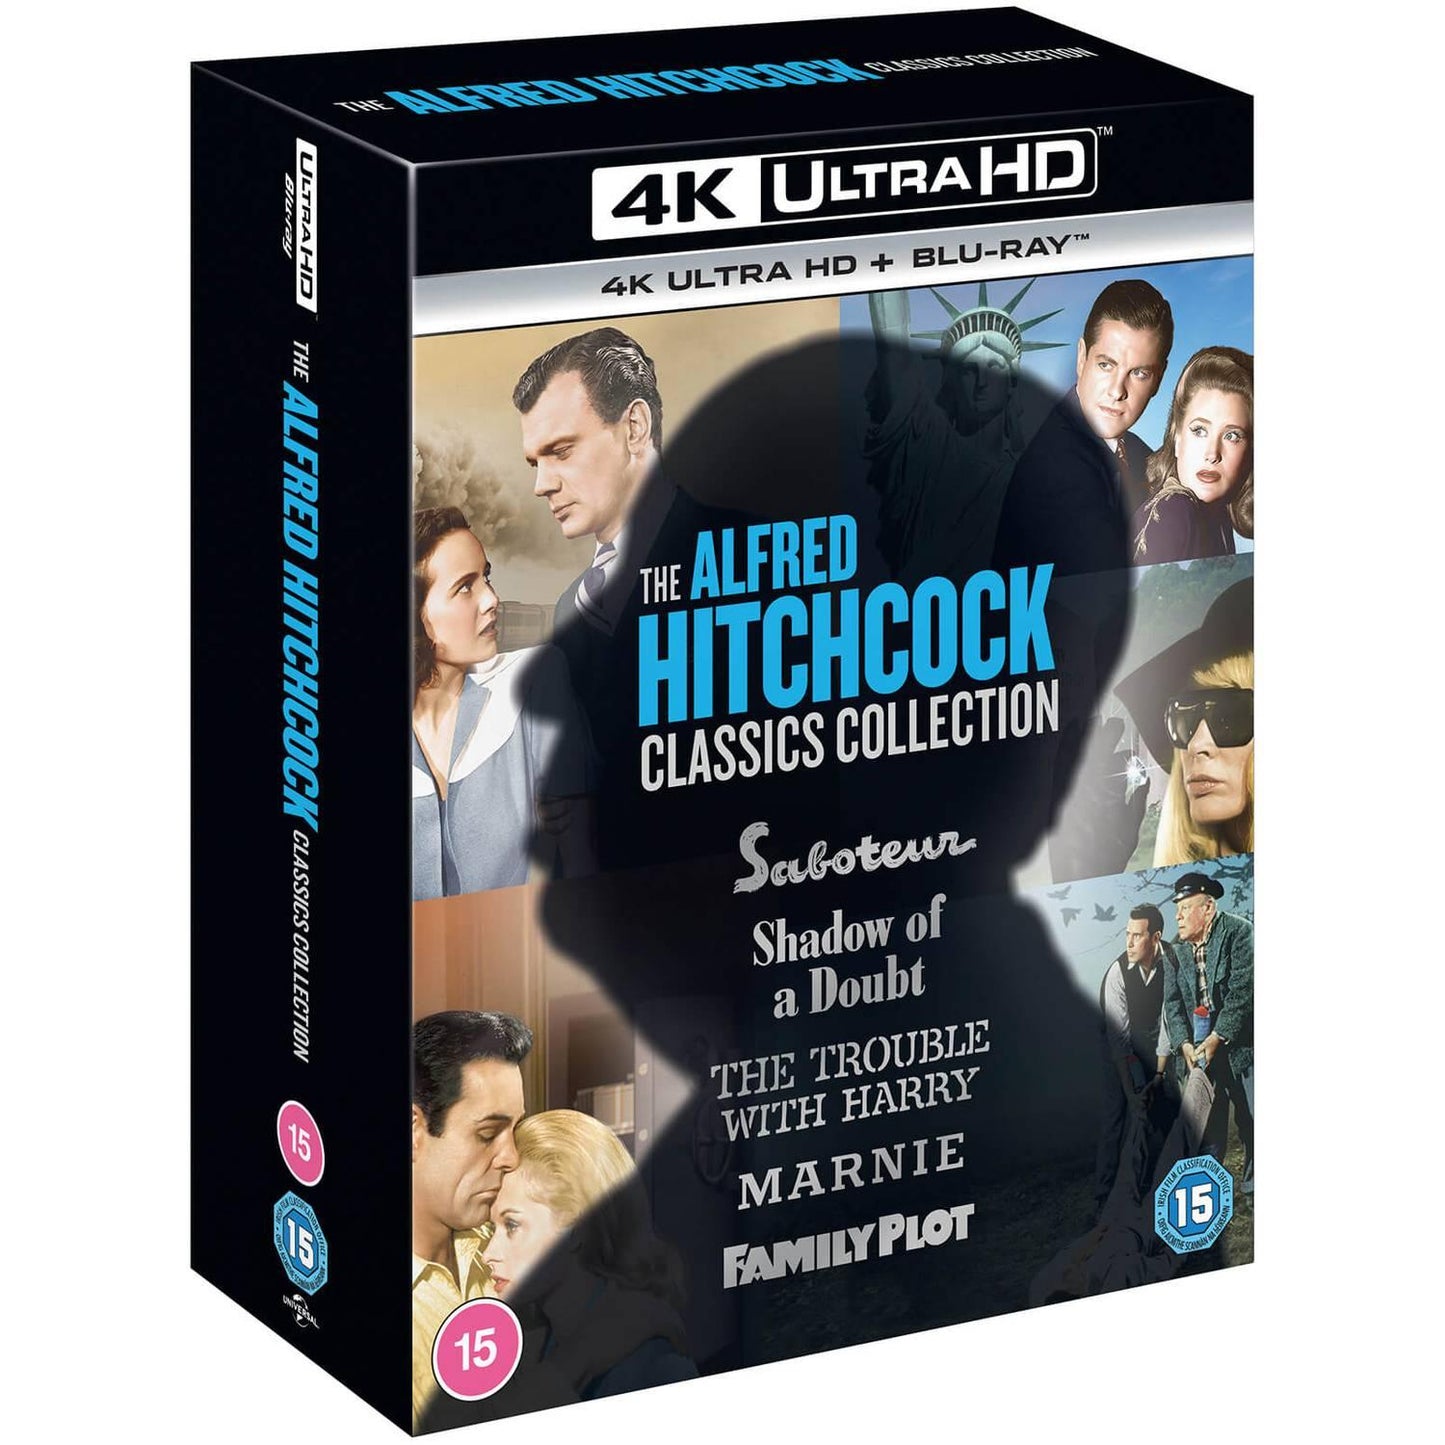 Альфред Хичкок: Классическая коллекция ч. 2 (русск. яз. на Blu-ray) (4K UHD + Blu-ray)